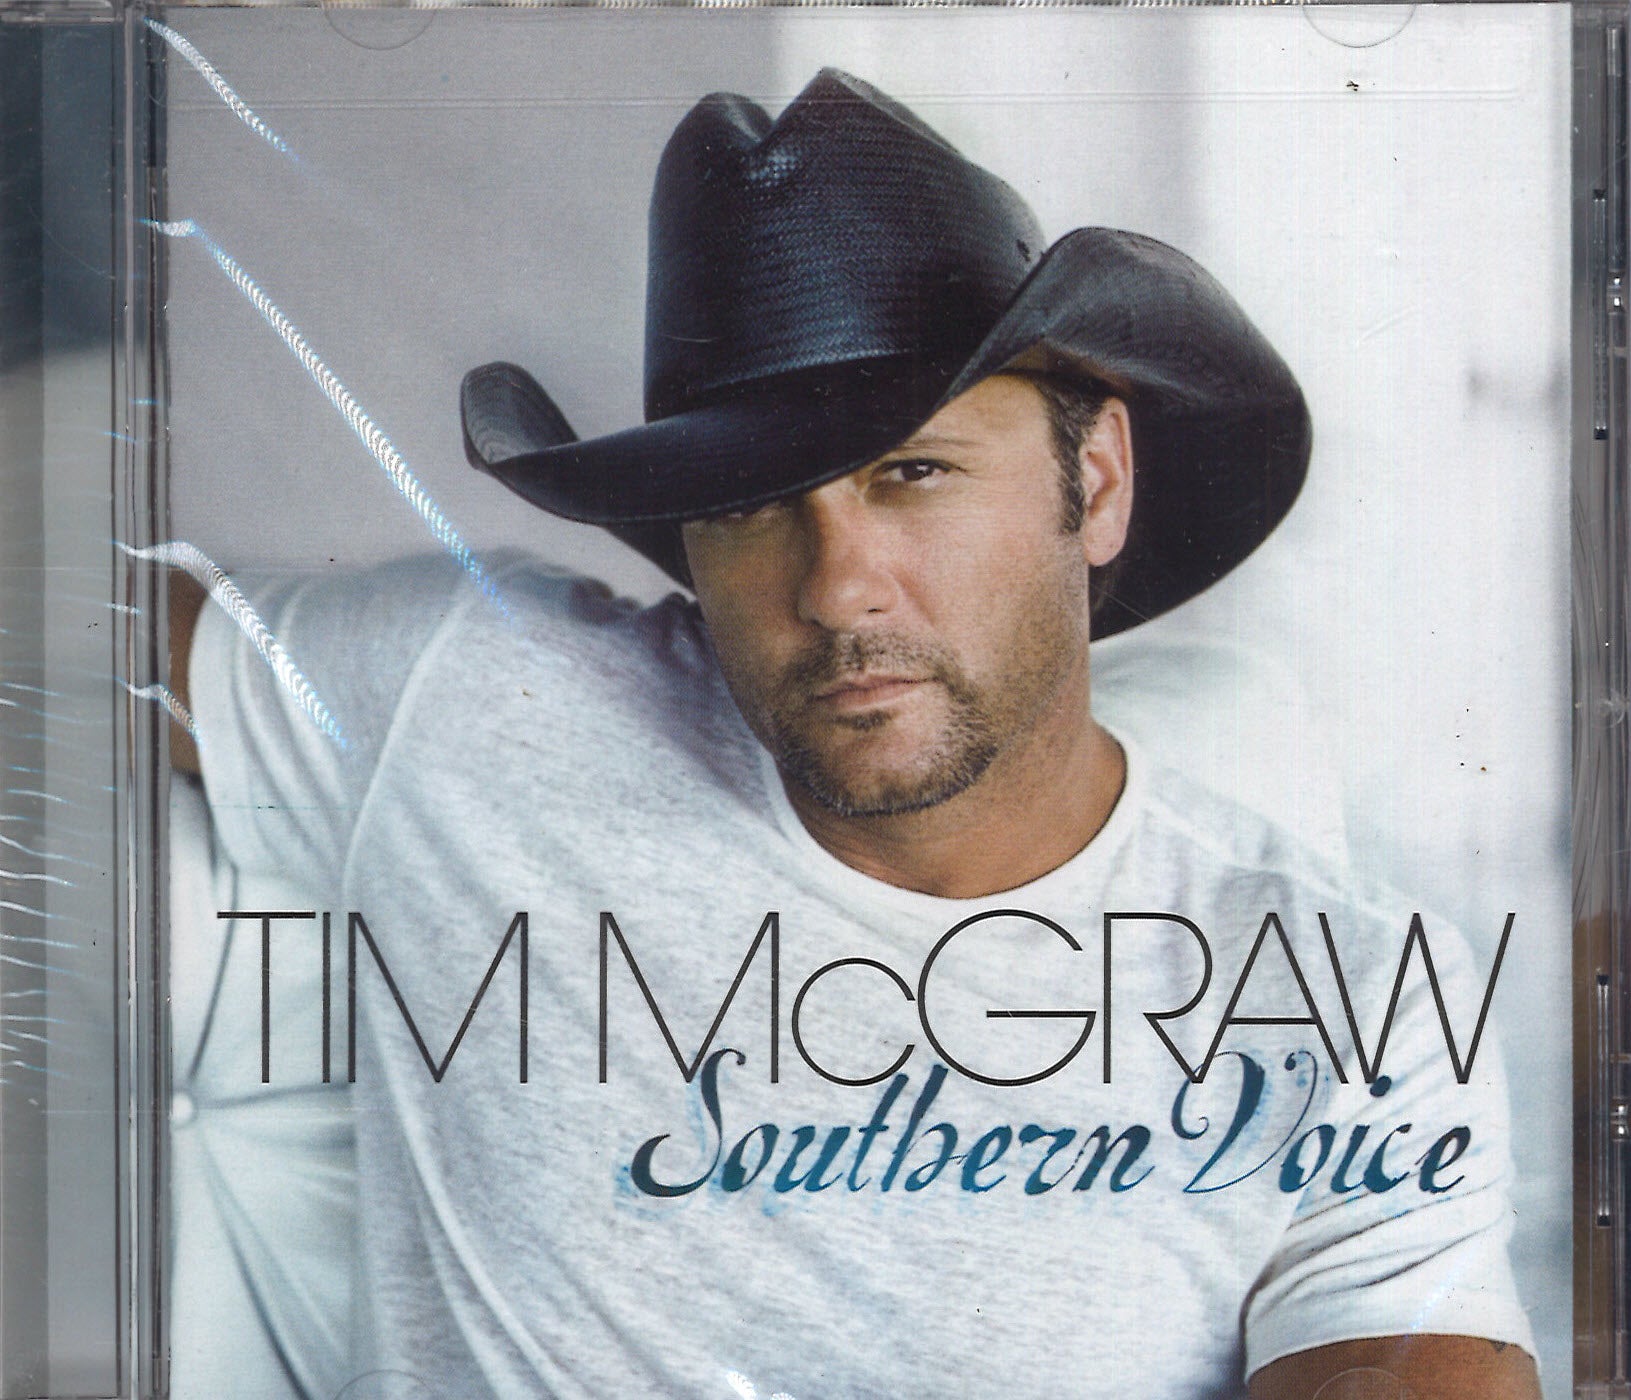 Tim McGraw Southern Voice